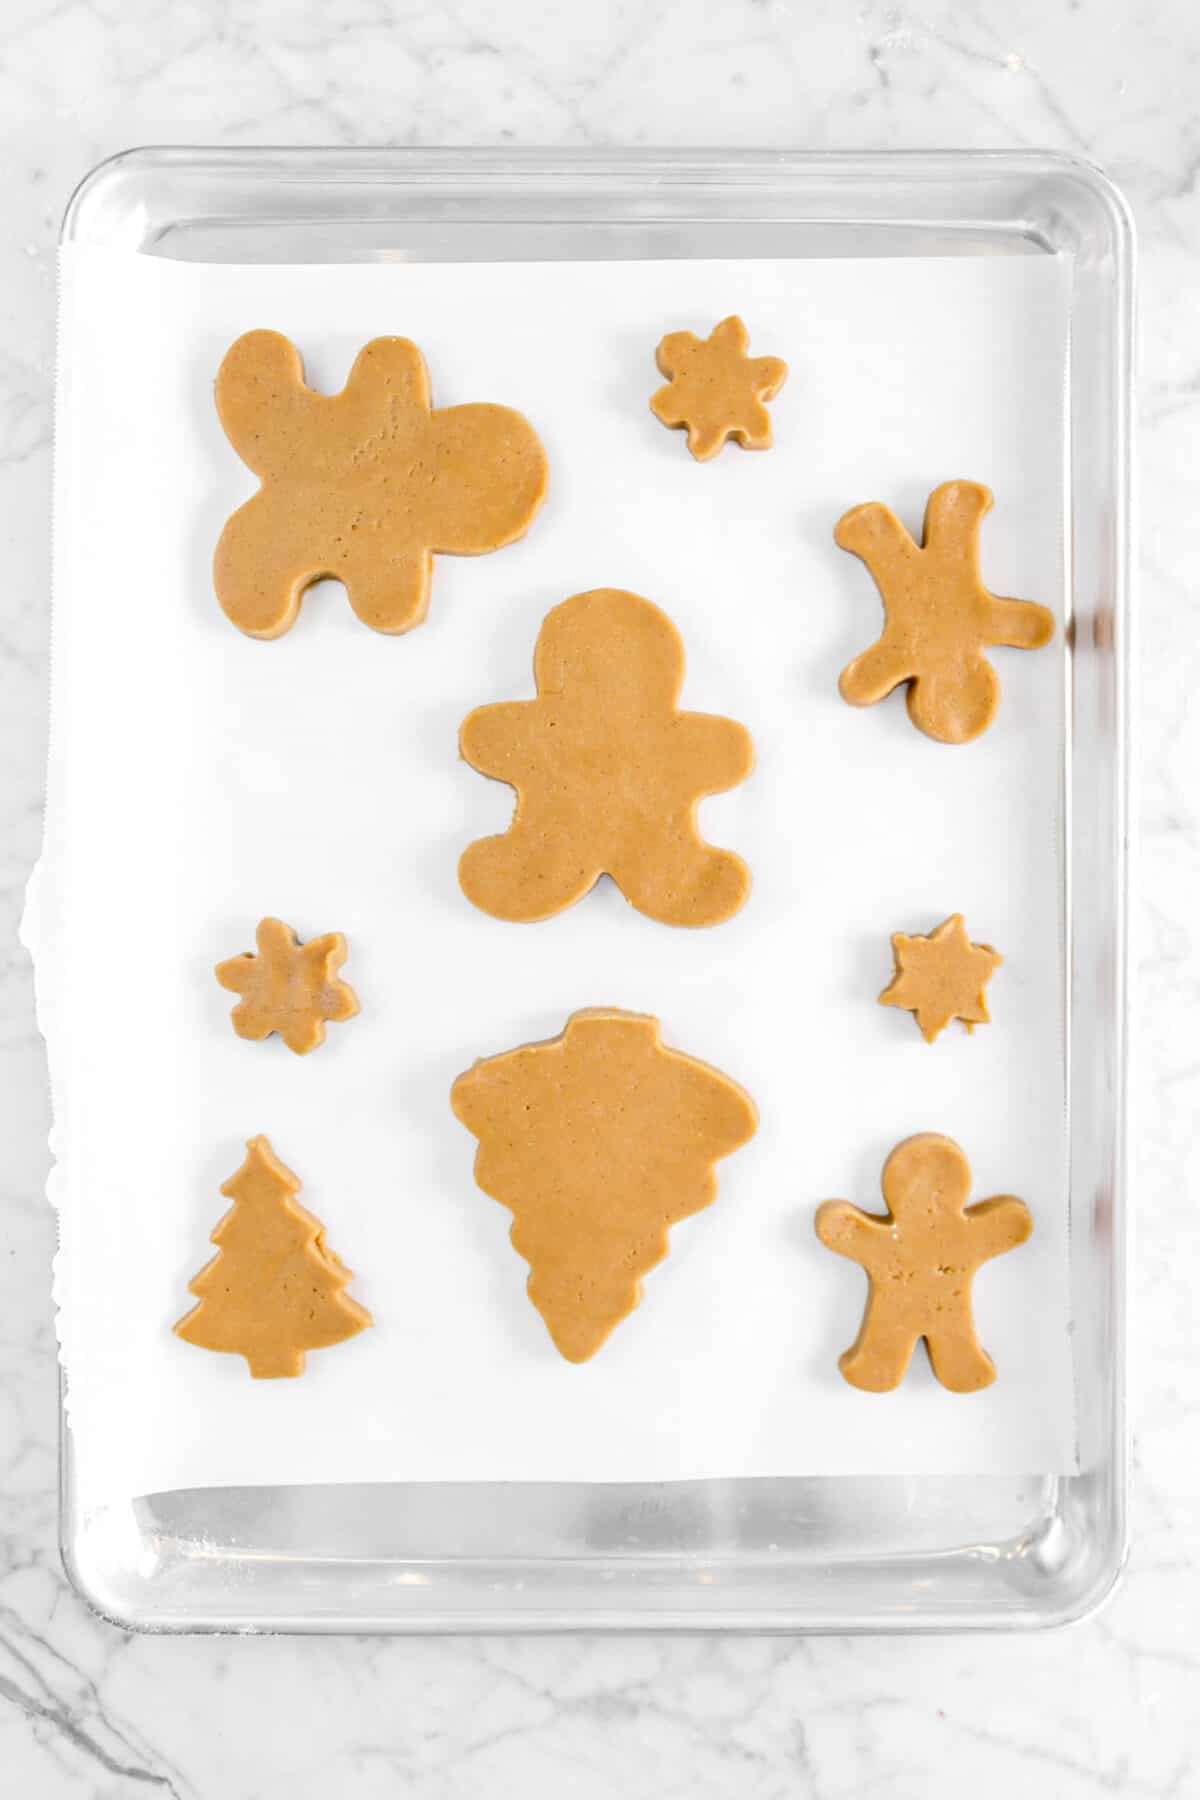 shaped cookies on baking sheet